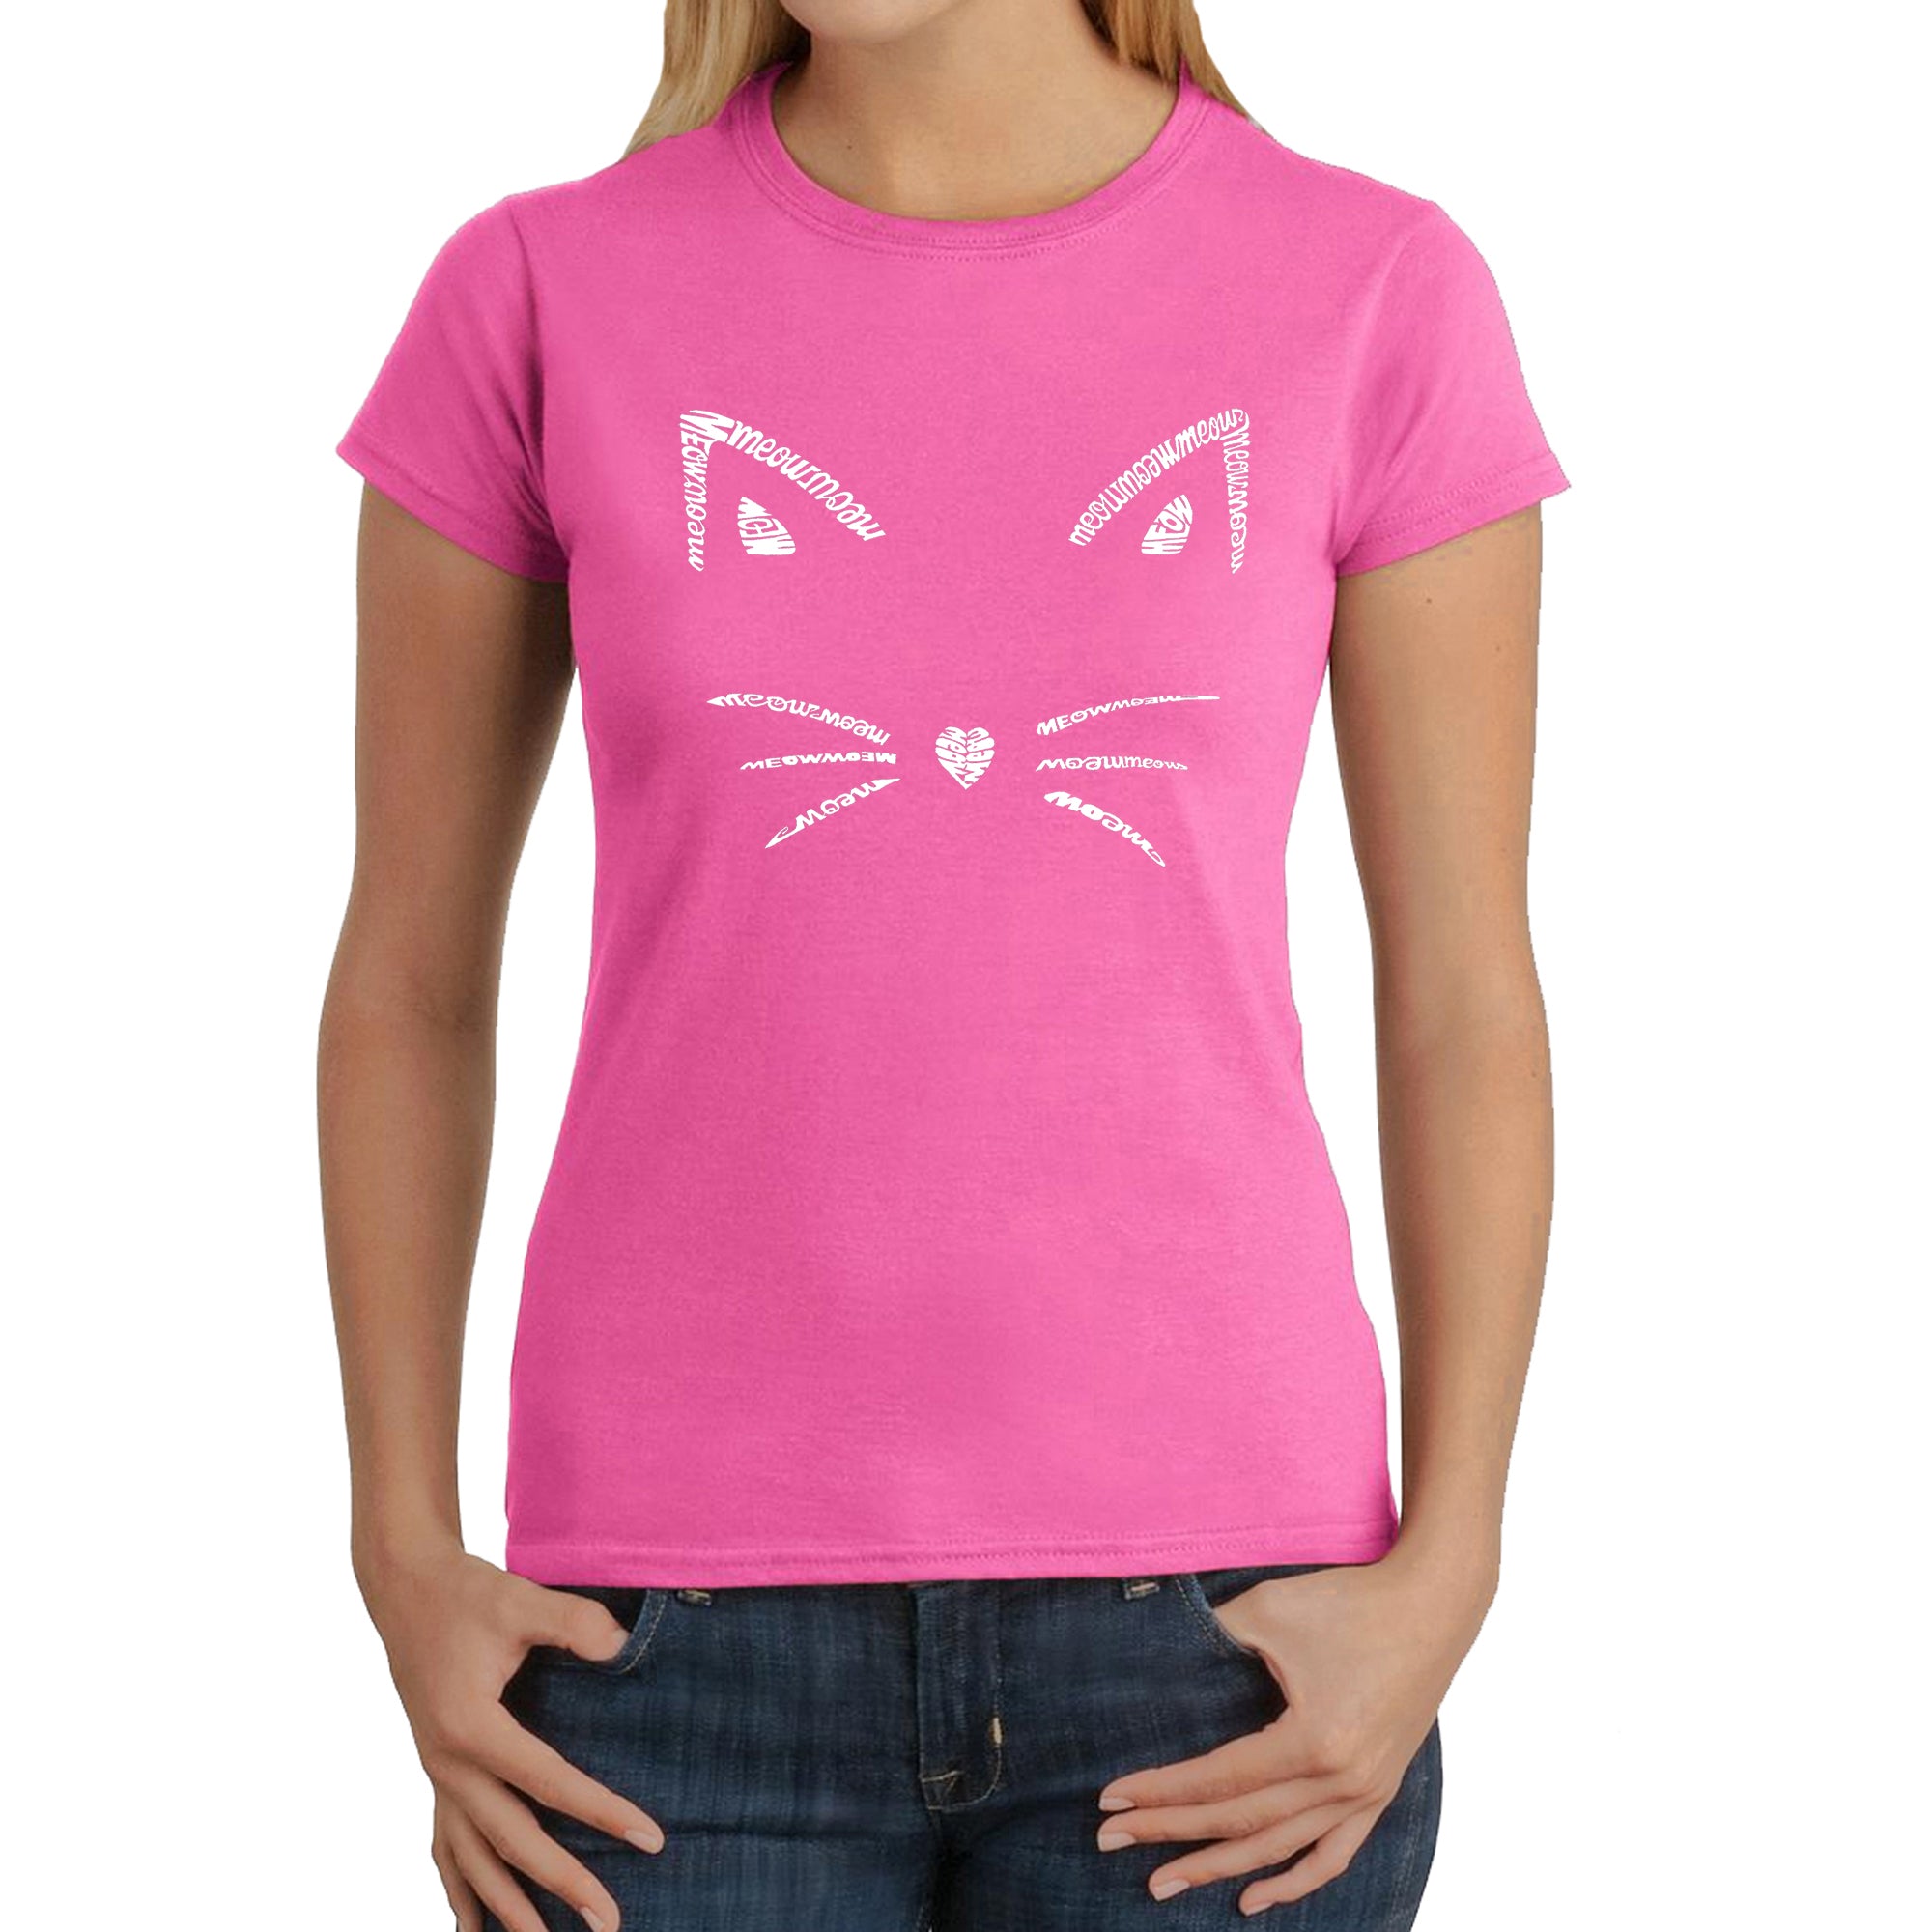 Whiskers - Women's Word Art T-Shirt - Pink - XS